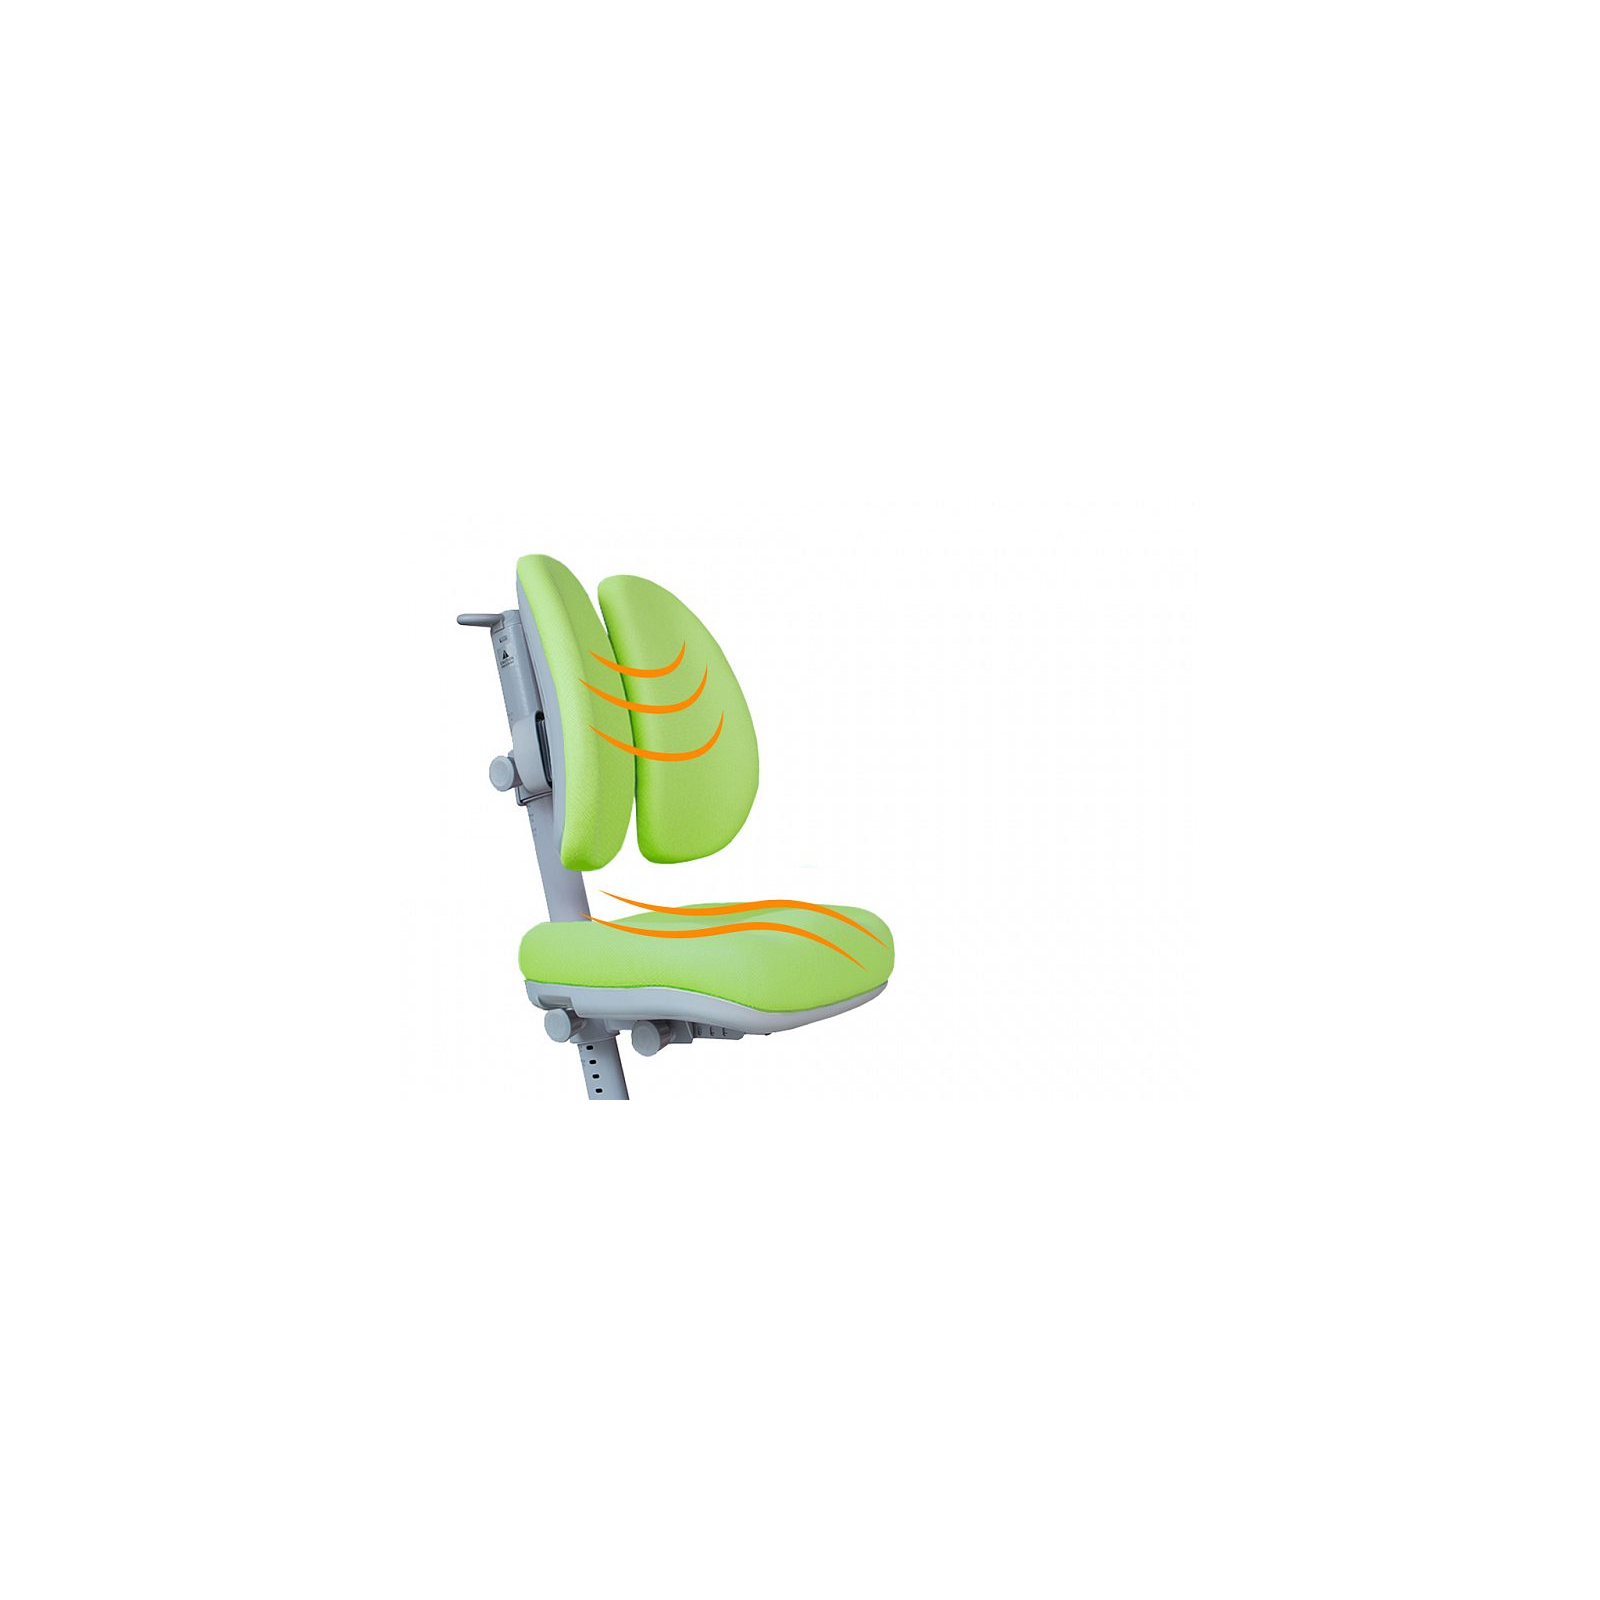 Дитяче крісло Mealux Onyx Duo APK (Y-115 APK) зображення 2